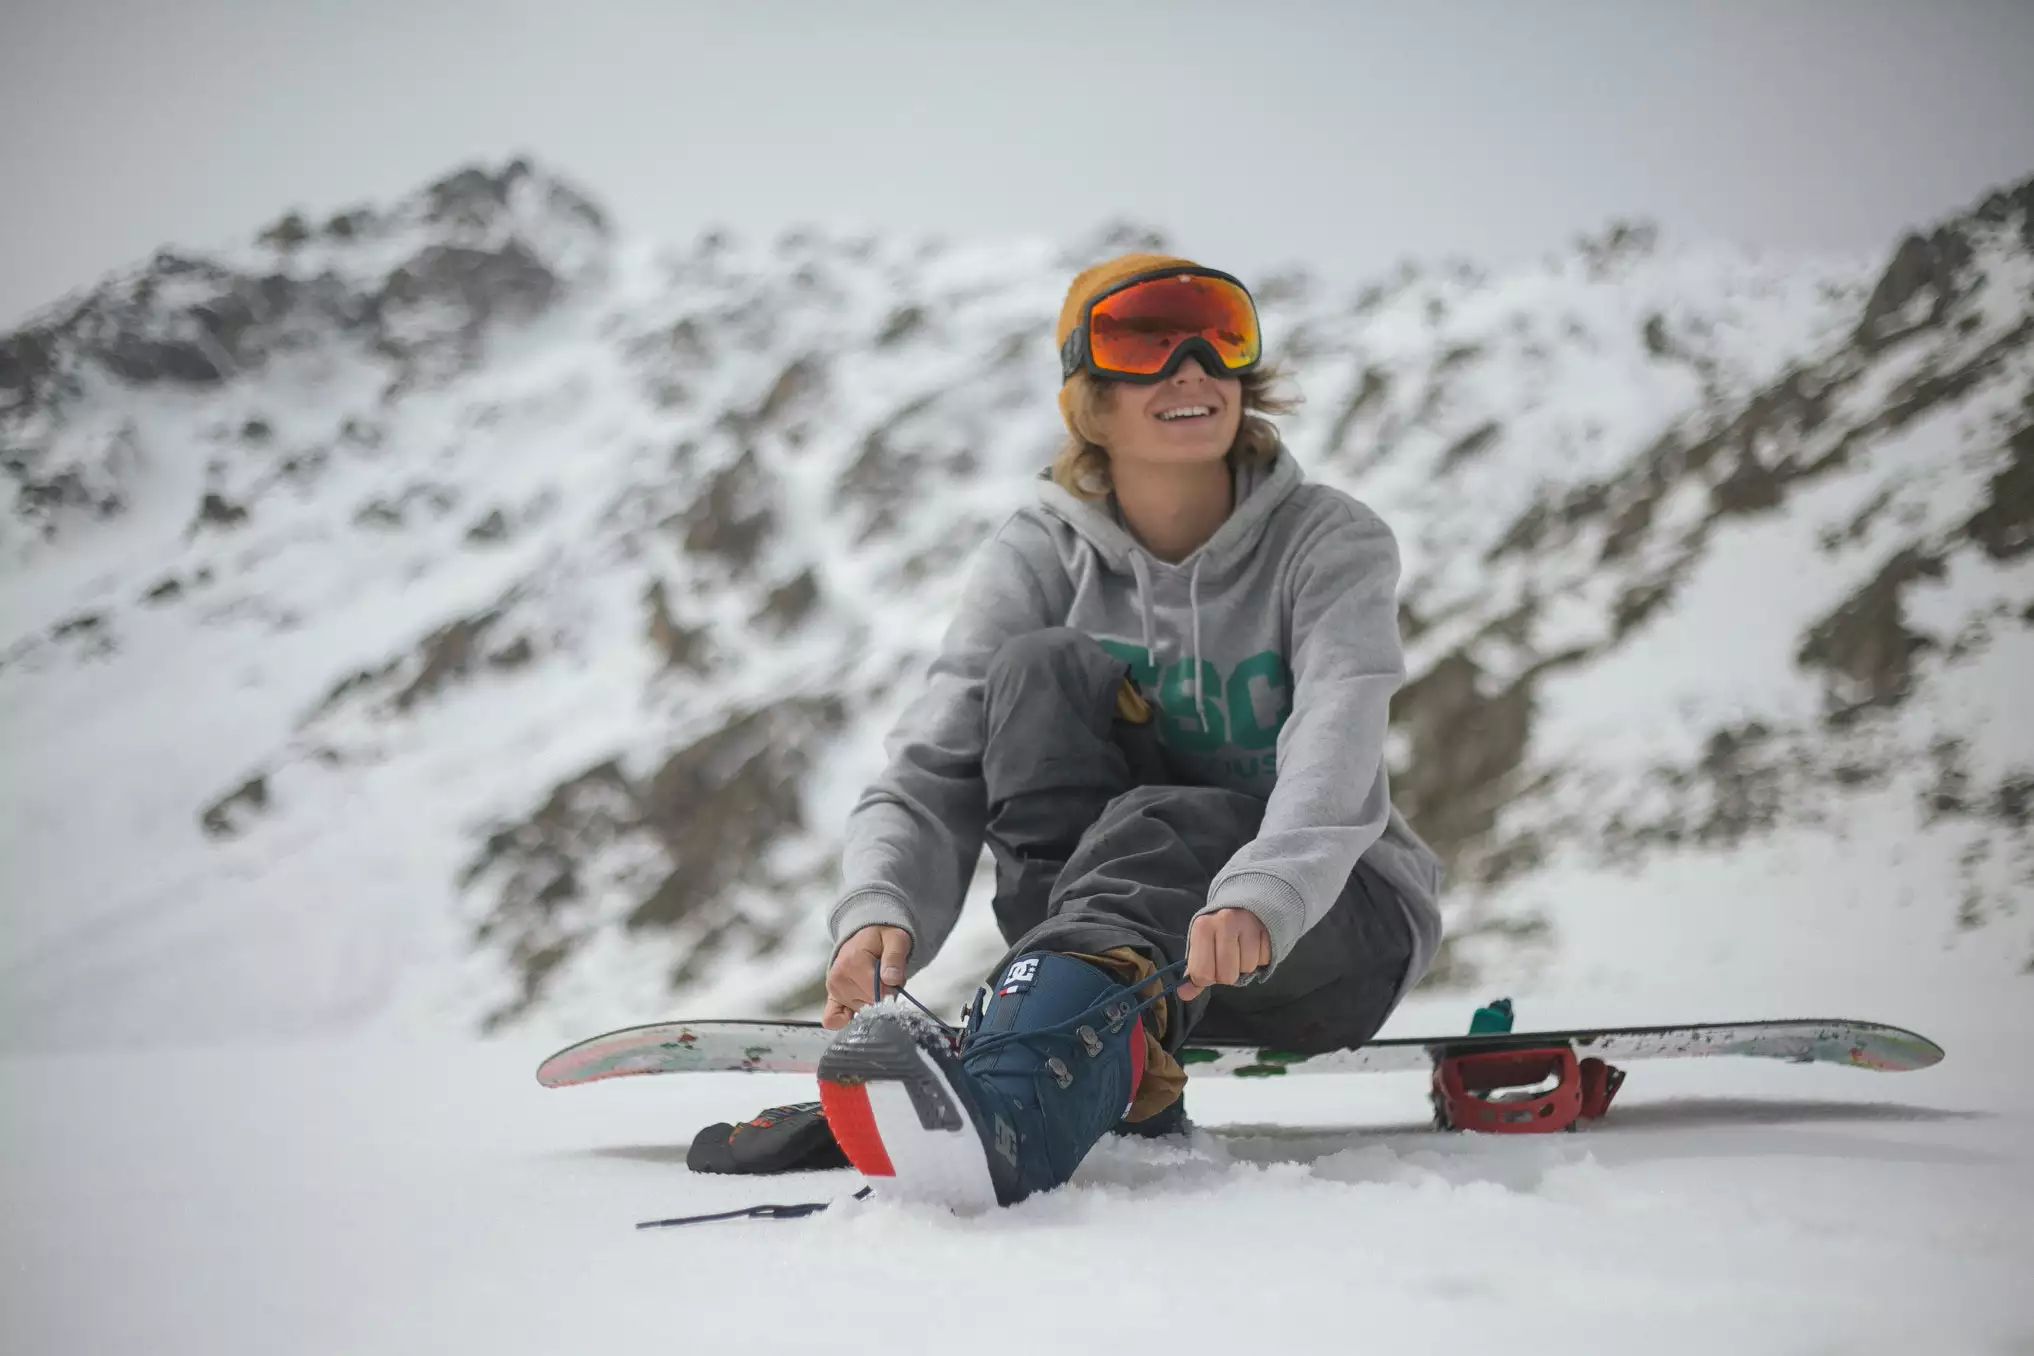 Snowboarding - Exhilarating winter adventures